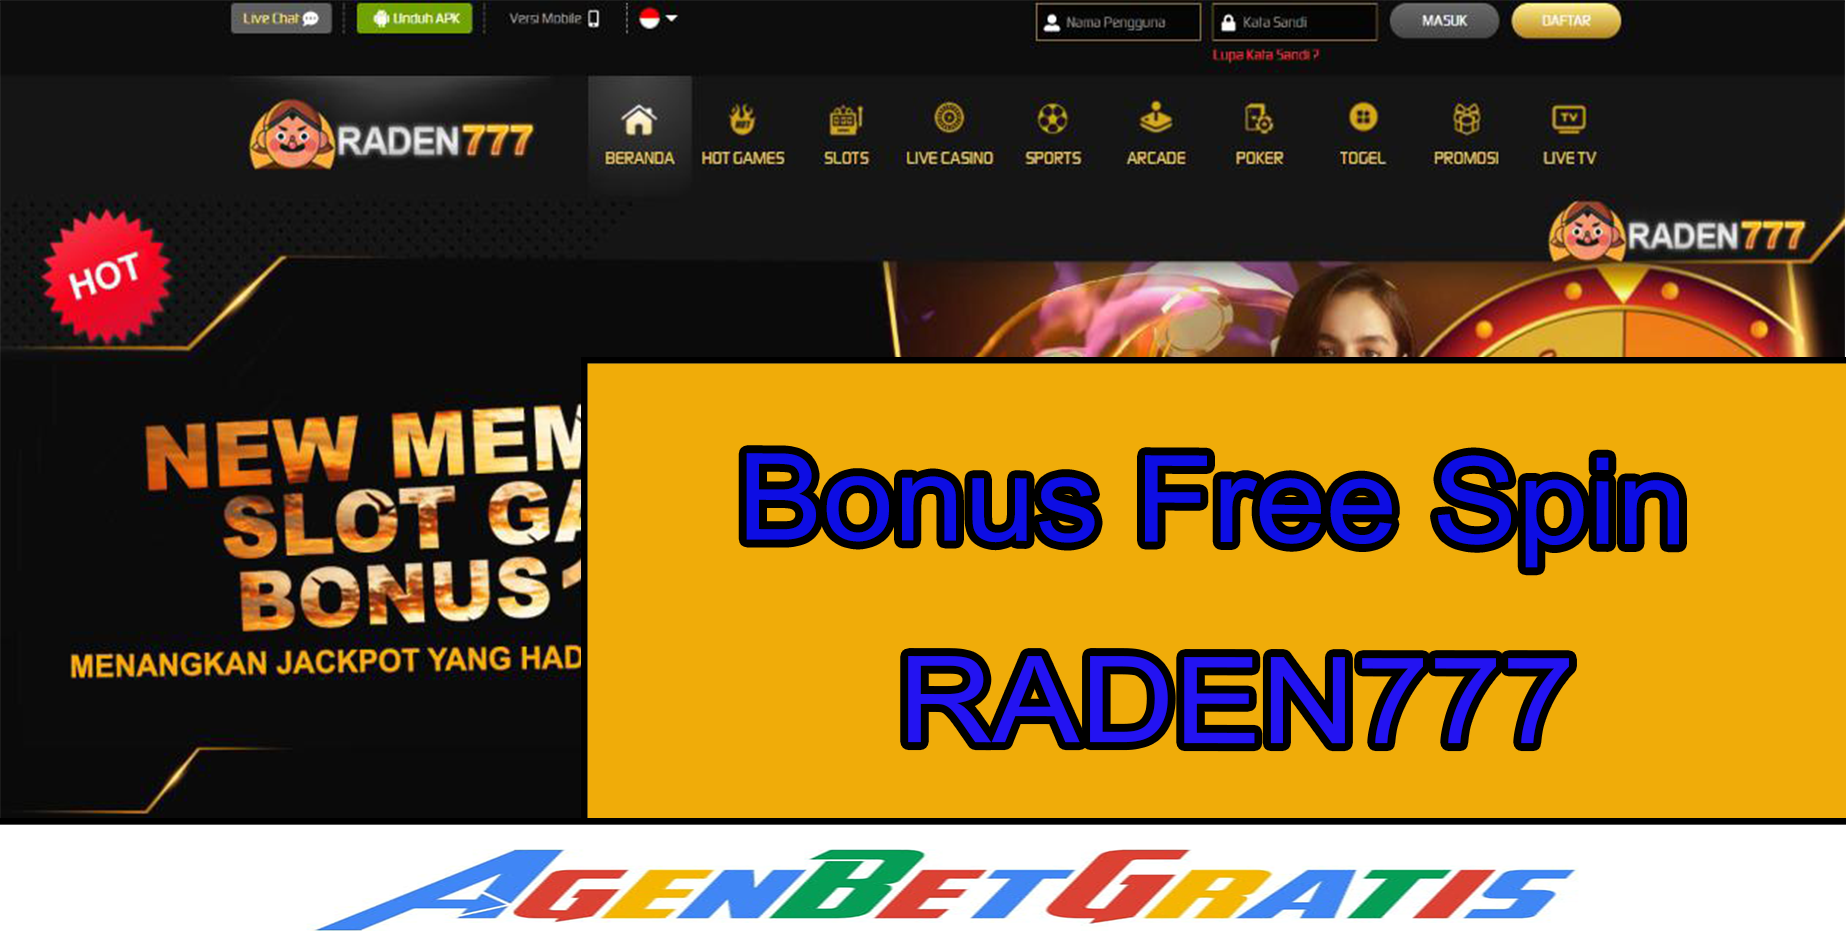 RADEN777 - Bonus Freespin